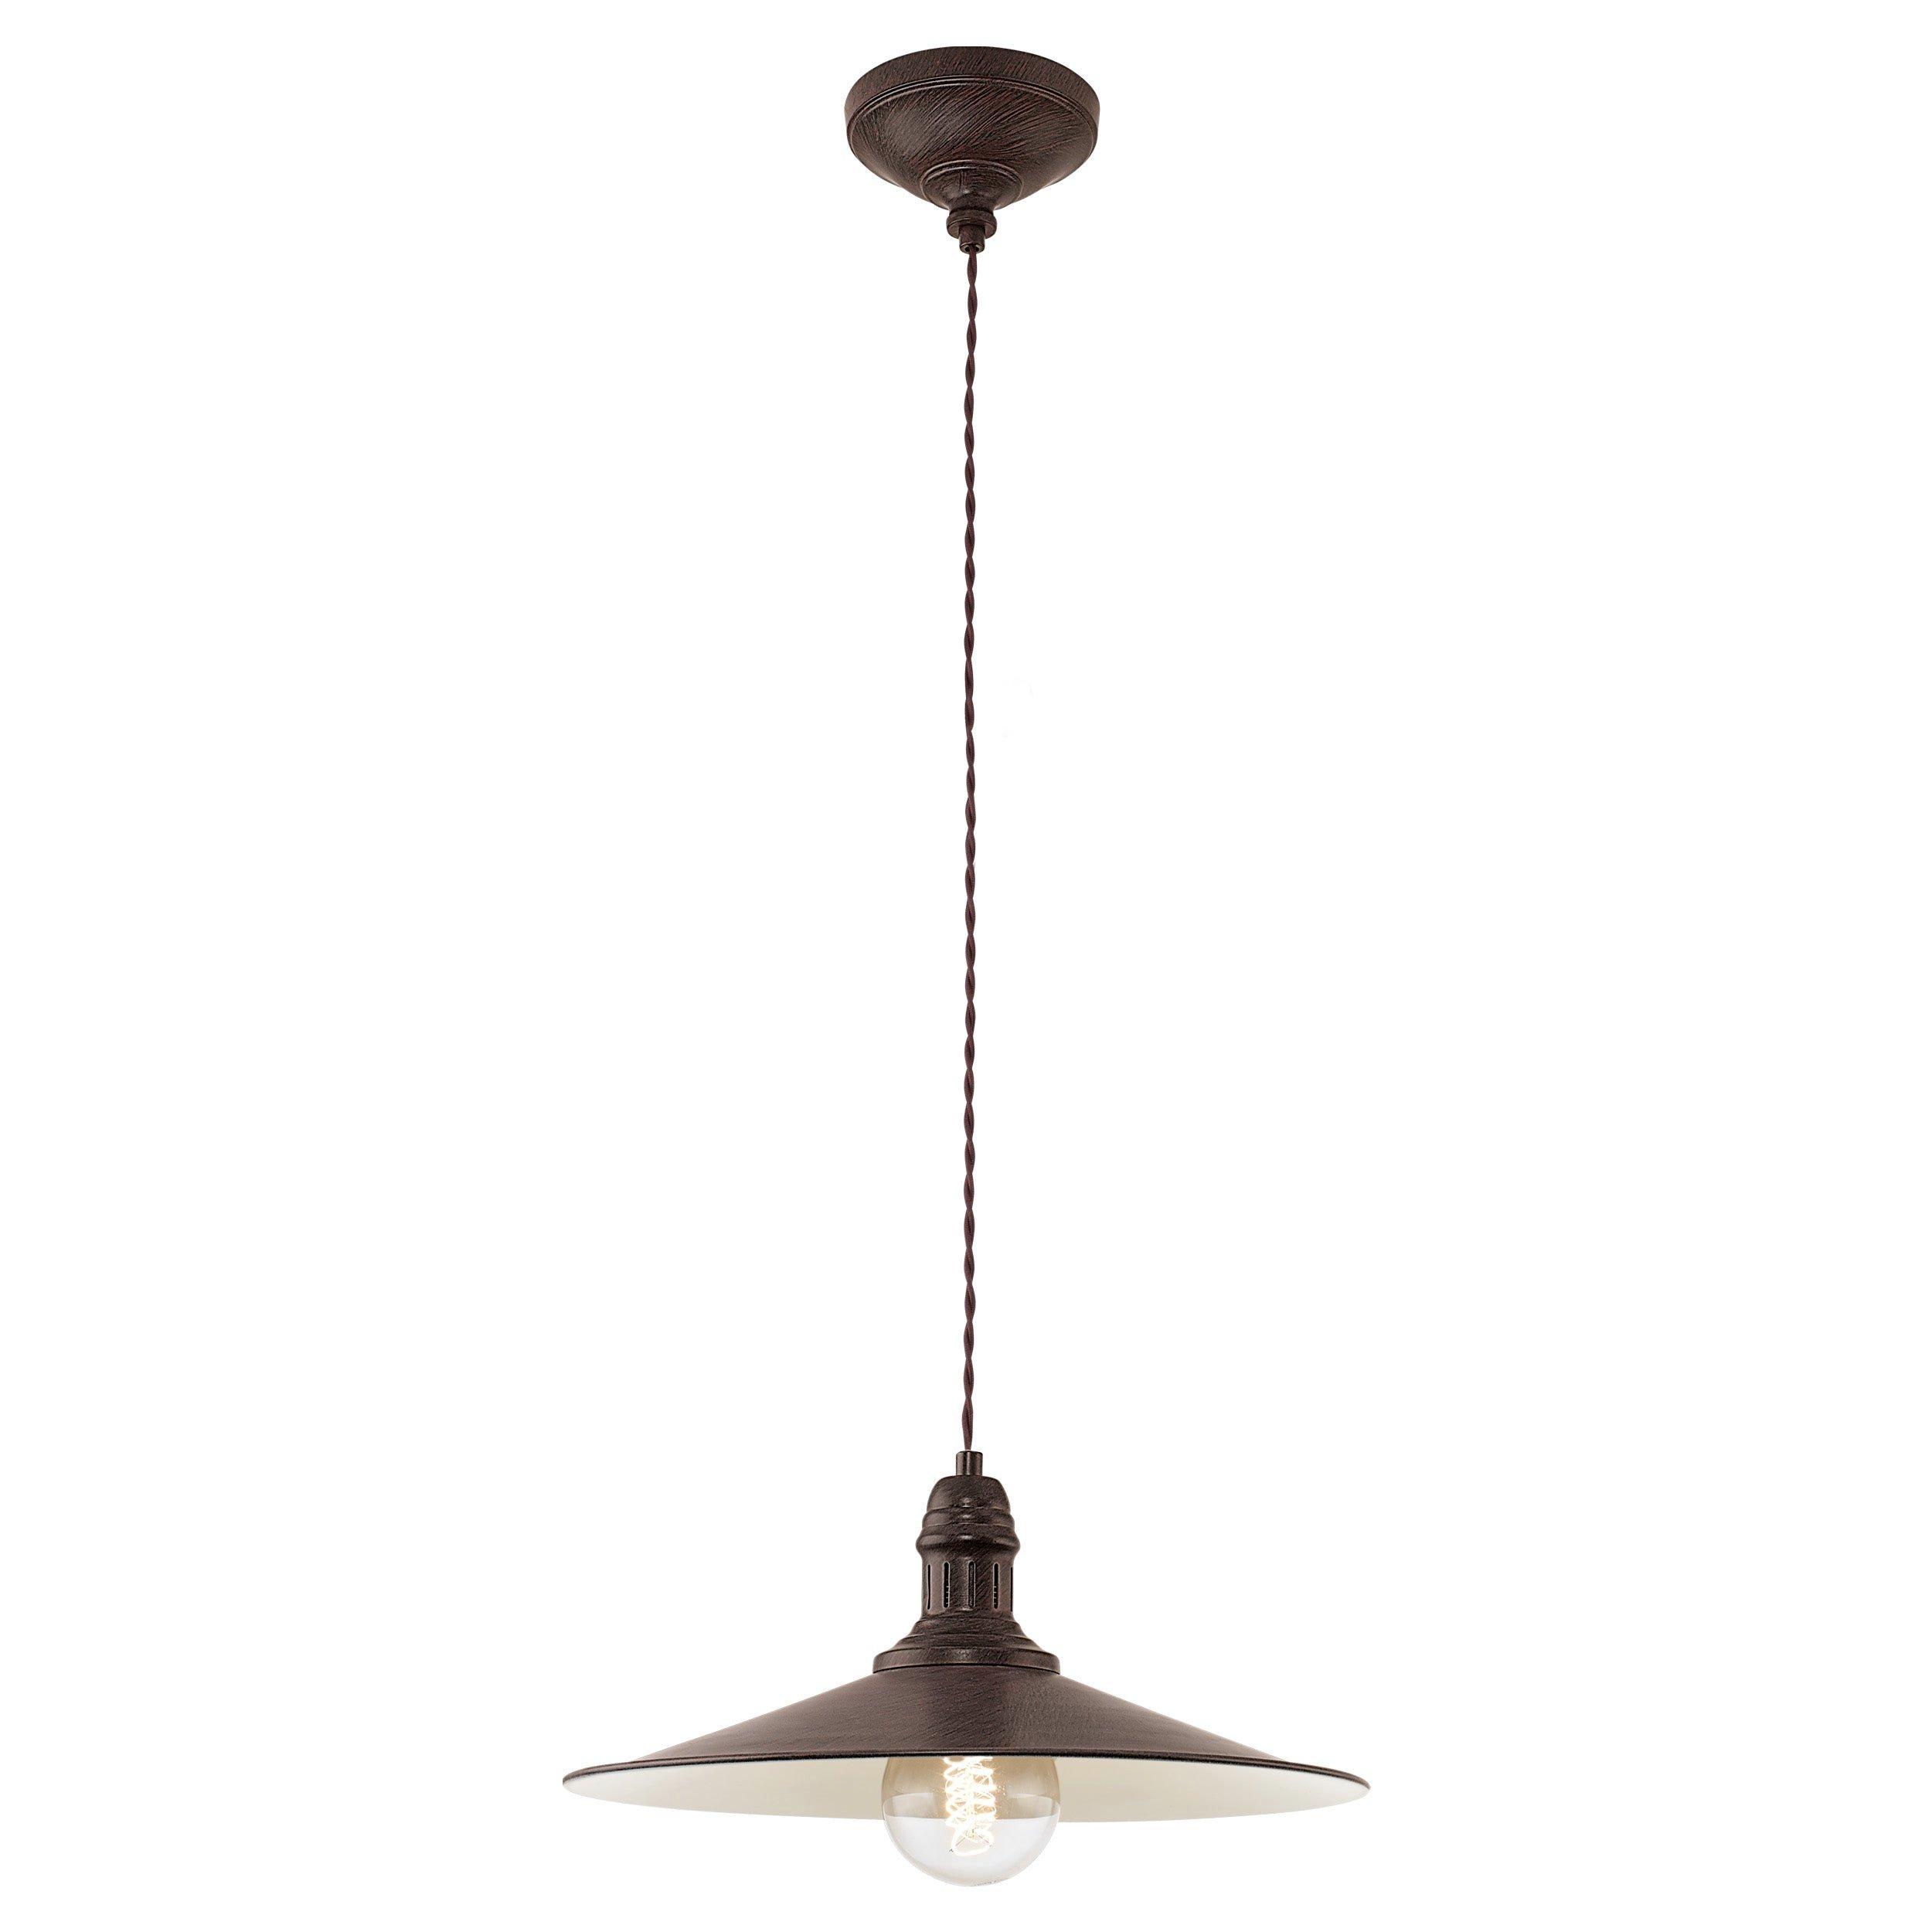 Hanging Ceiling Pendant Light Antique Brown & Beige Steel 1x 60W E27 Bulb